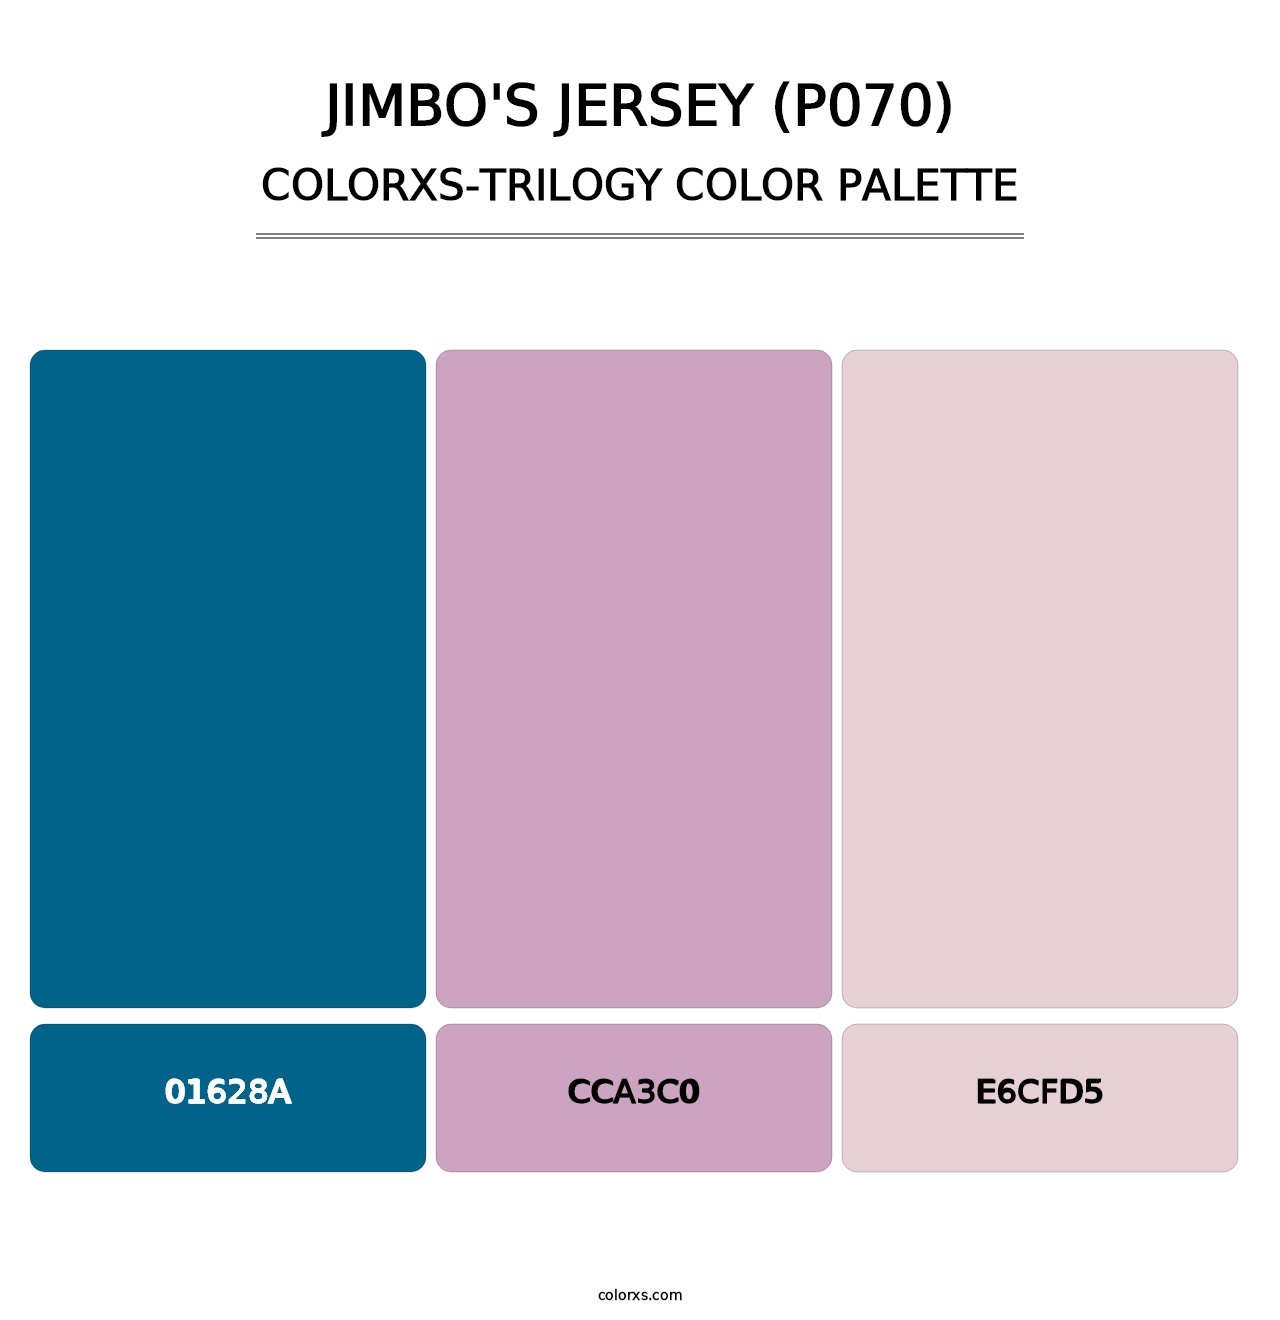 Jimbo's Jersey (P070) - Colorxs Trilogy Palette